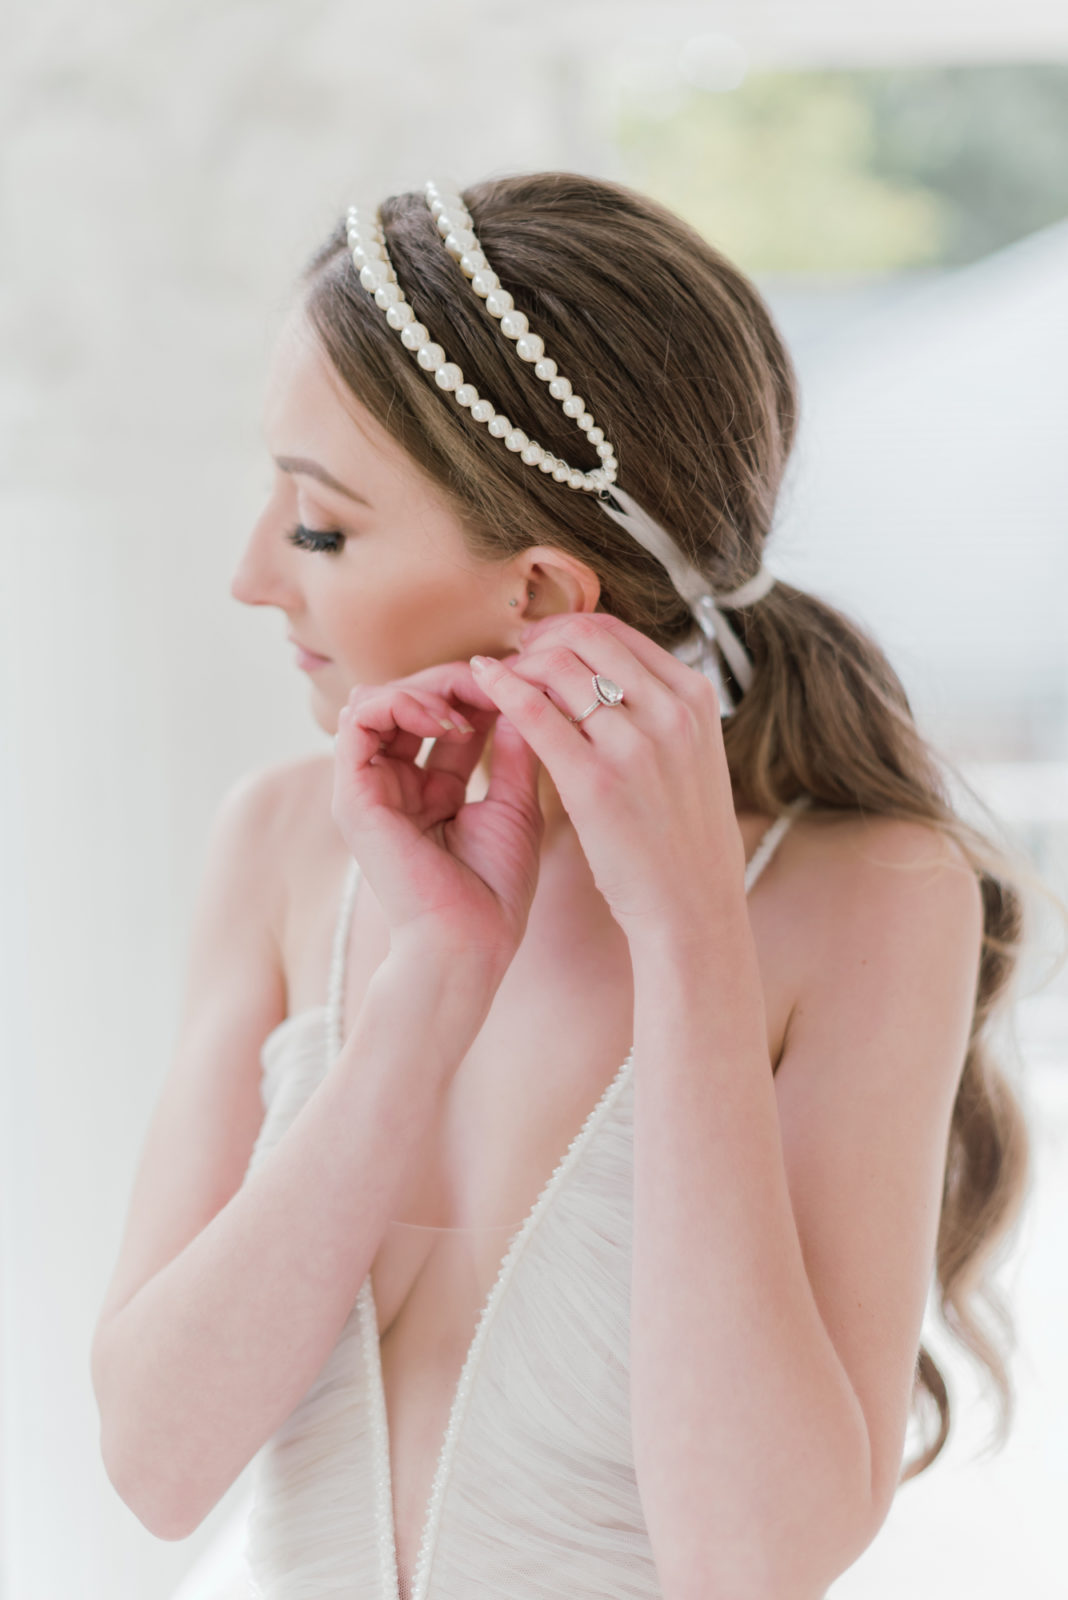 Pearl bridal headband from Blair Nadeau Bridal Adornments featured on Brontë Bride.